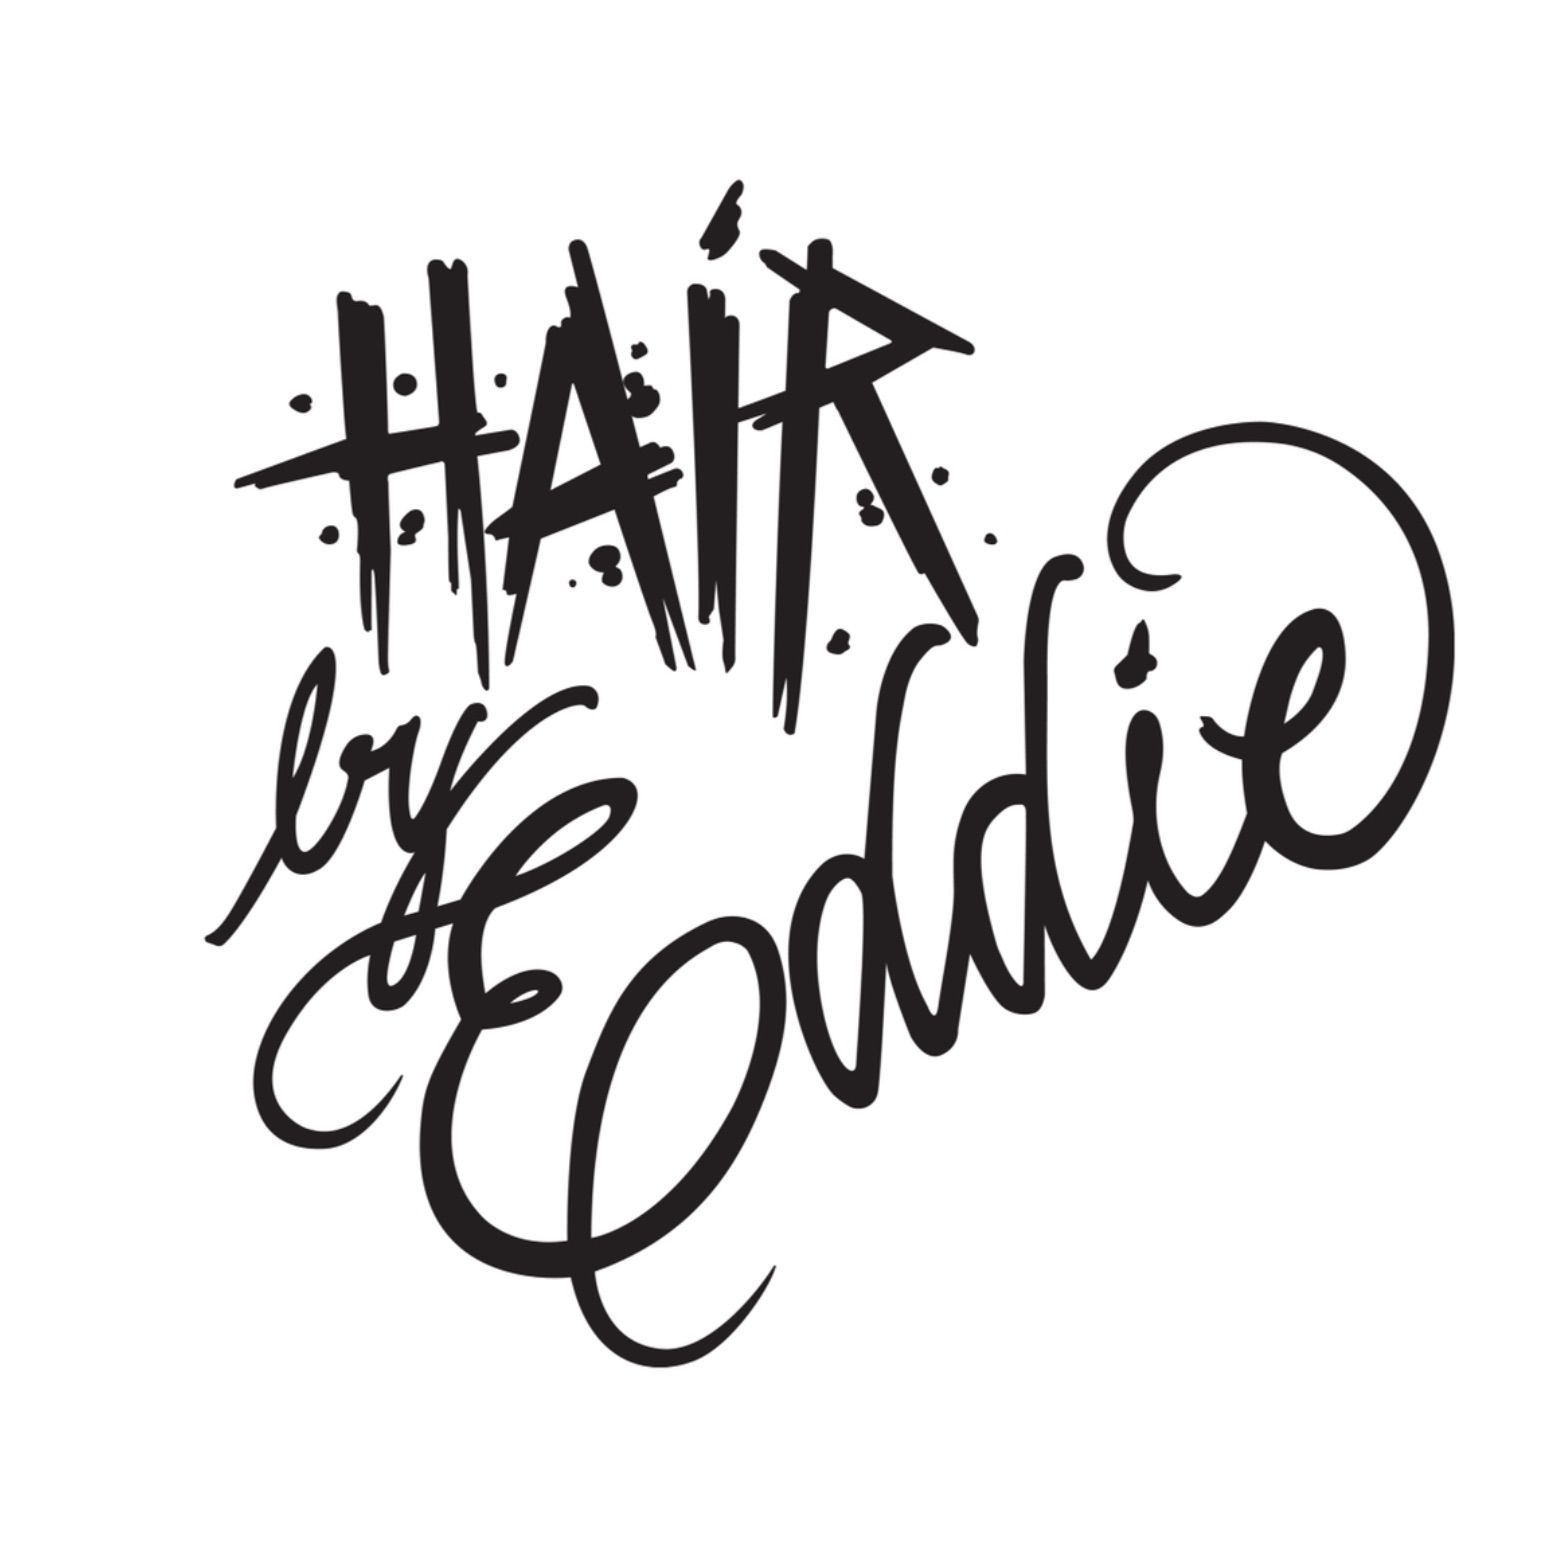 Hair by Eddie at EgoTrip Hair Grooming, 354 Union Blvd., Totowa, 07512